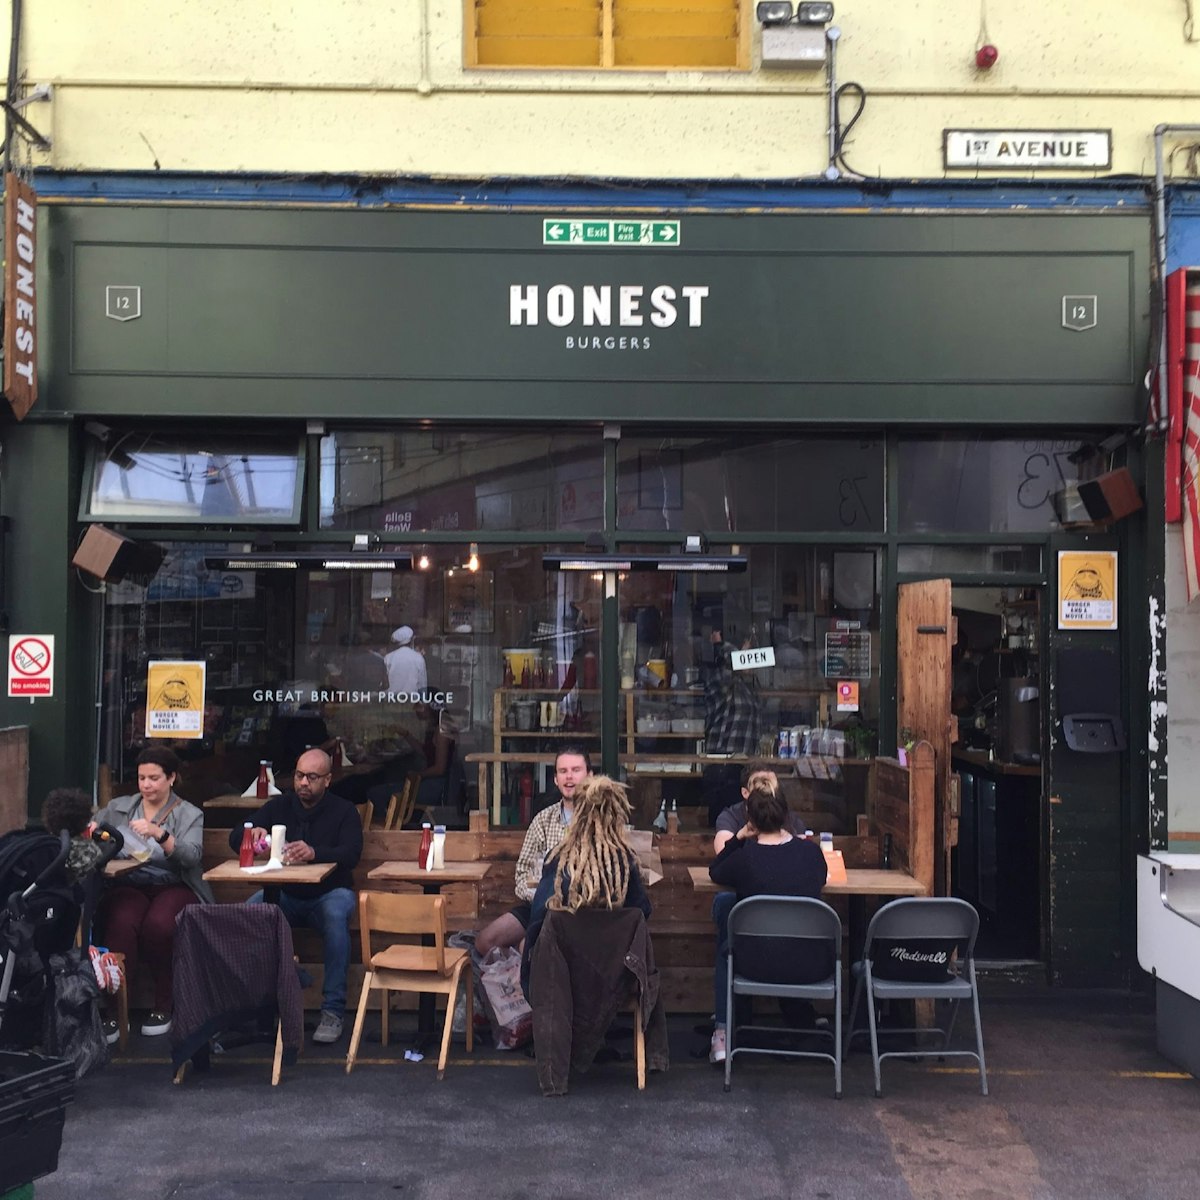 The exterior of Honest Burgers in Brixton